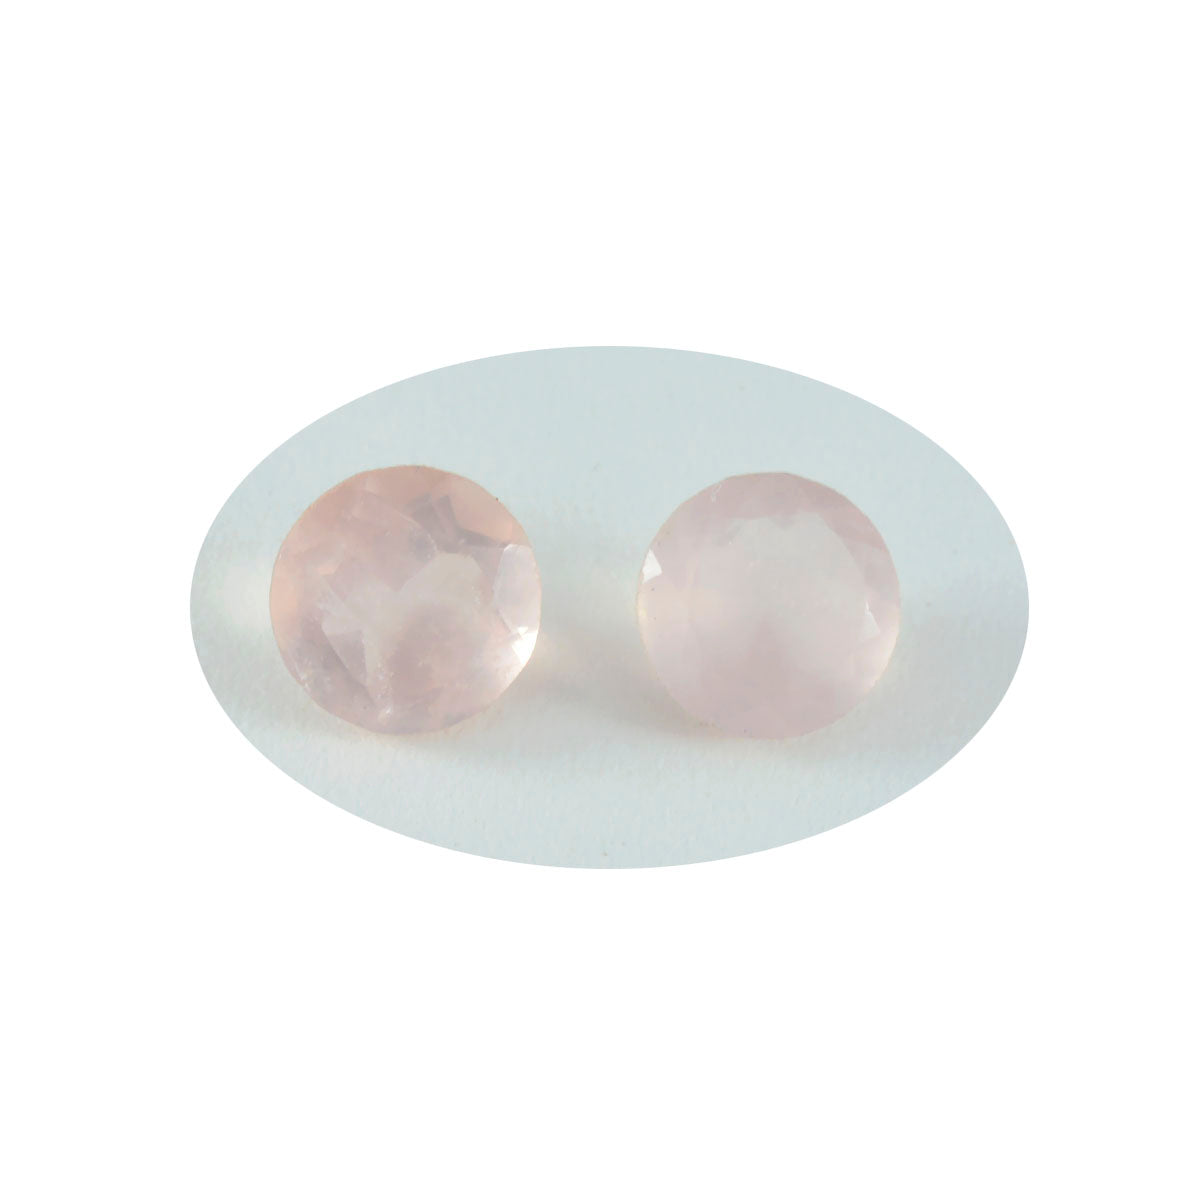 riyogems 1pc ピンク ローズクォーツ ファセット 9x9 mm ラウンド形状の美しい品質のルース宝石